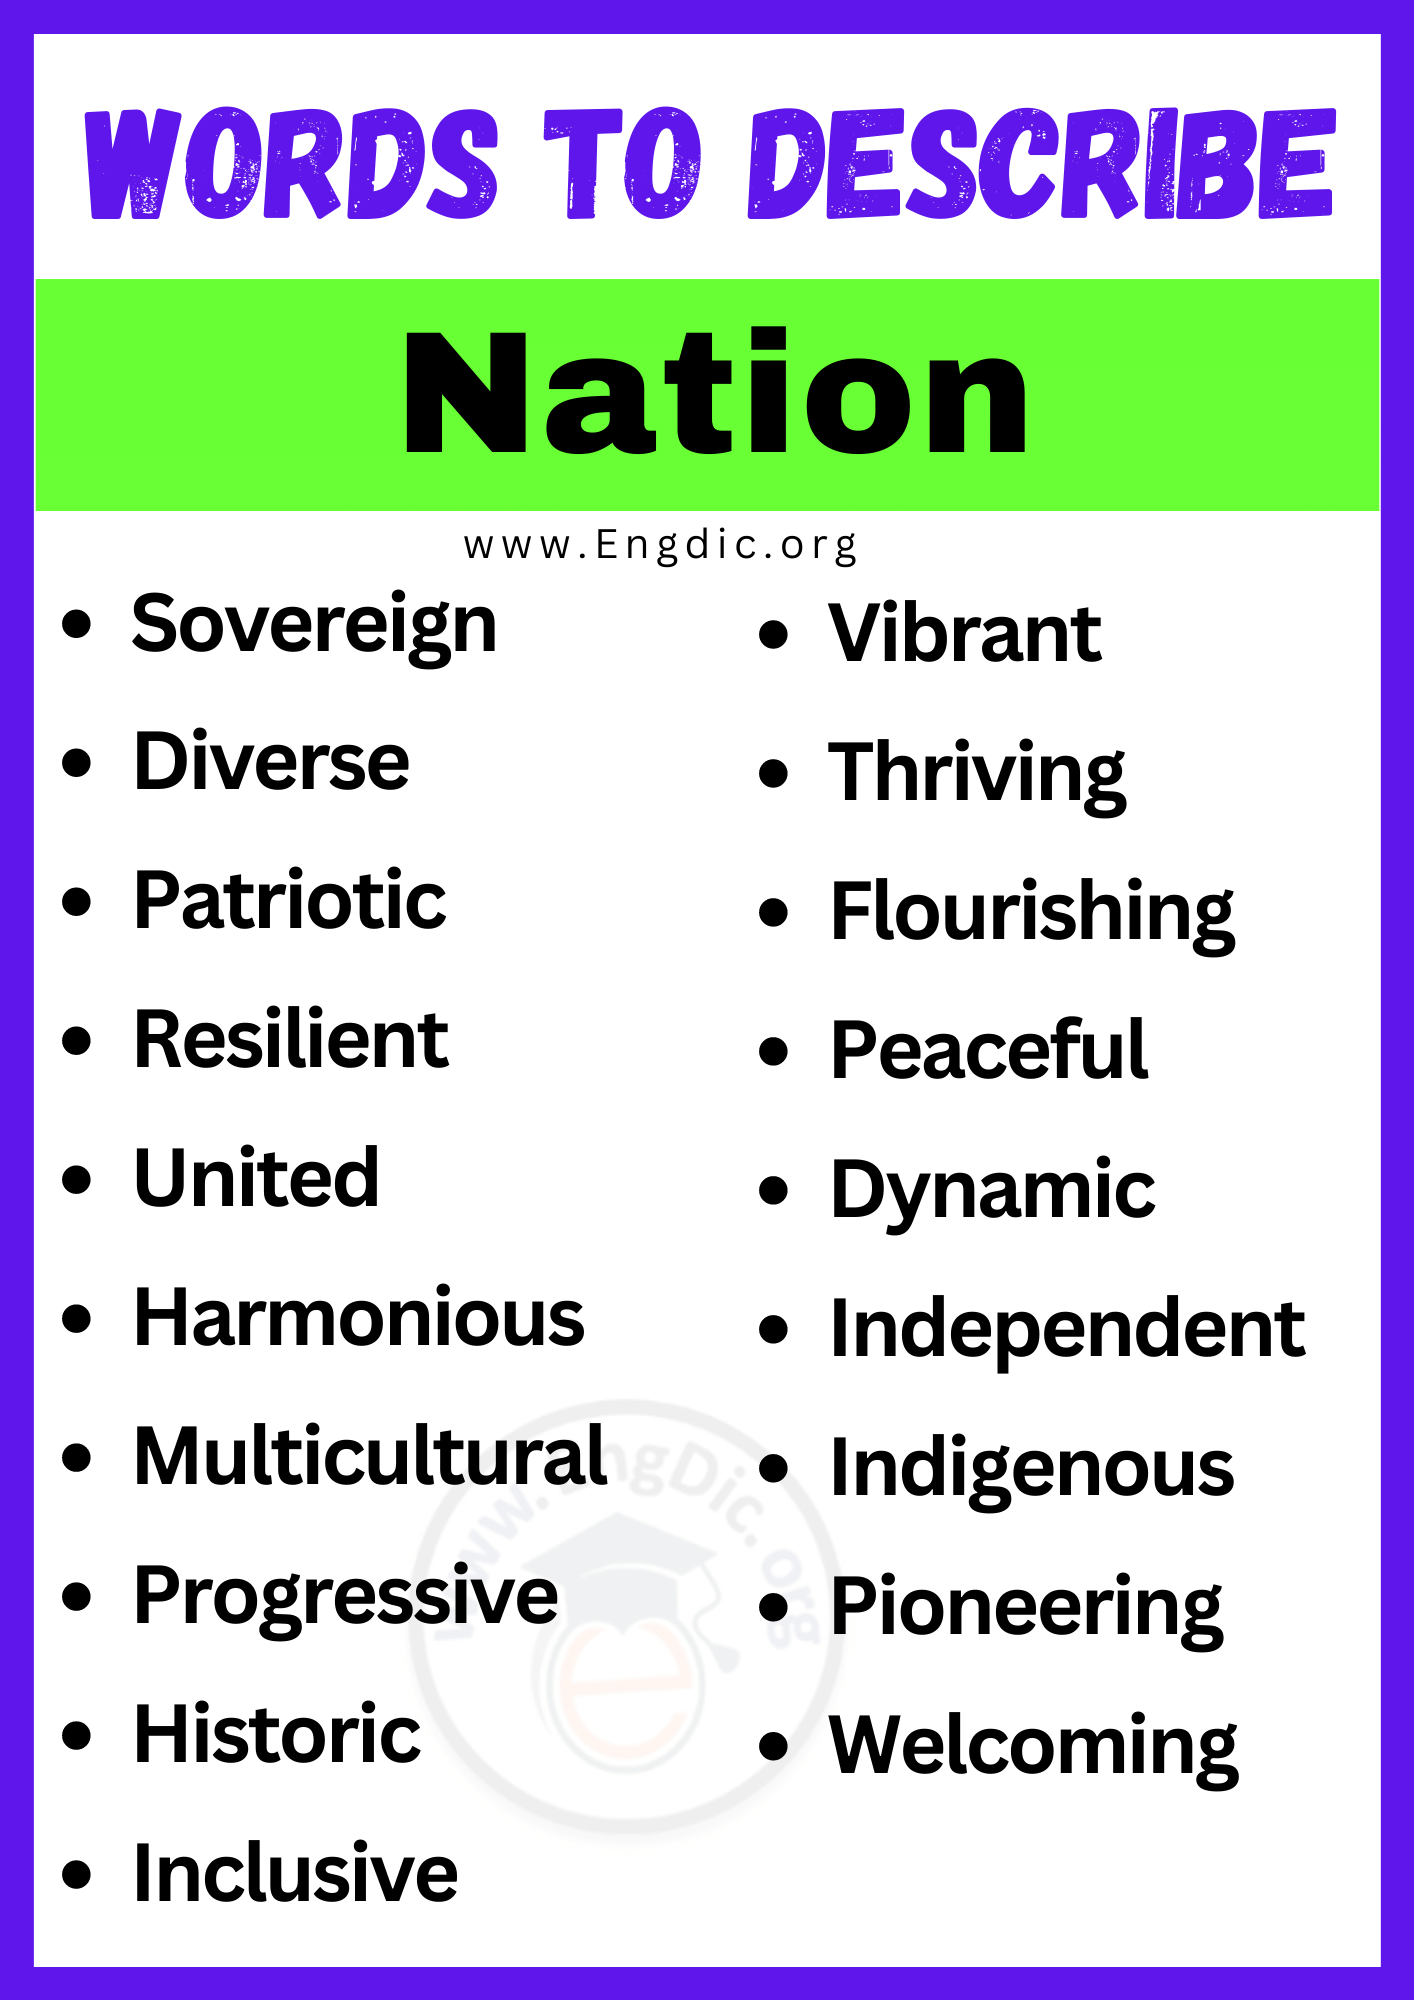 Words to Describe Nation